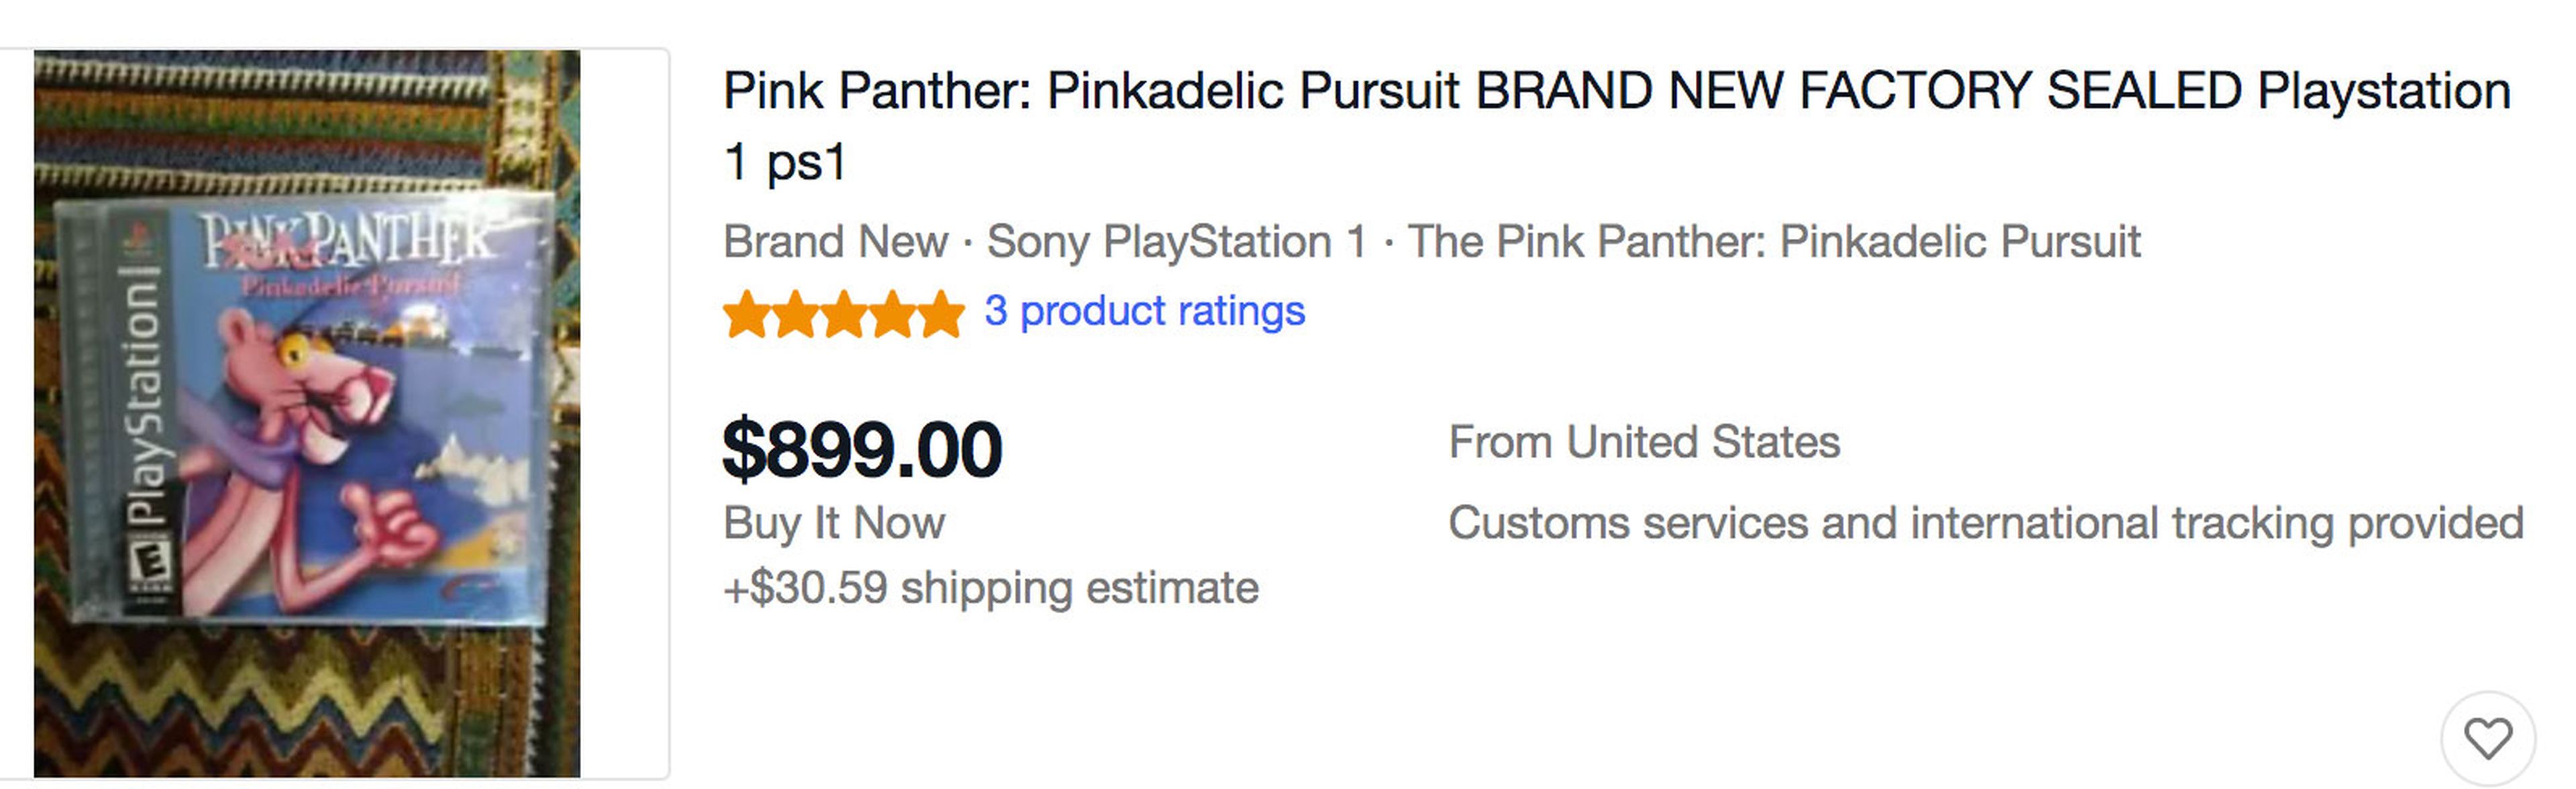 Pin Panther PlayStation